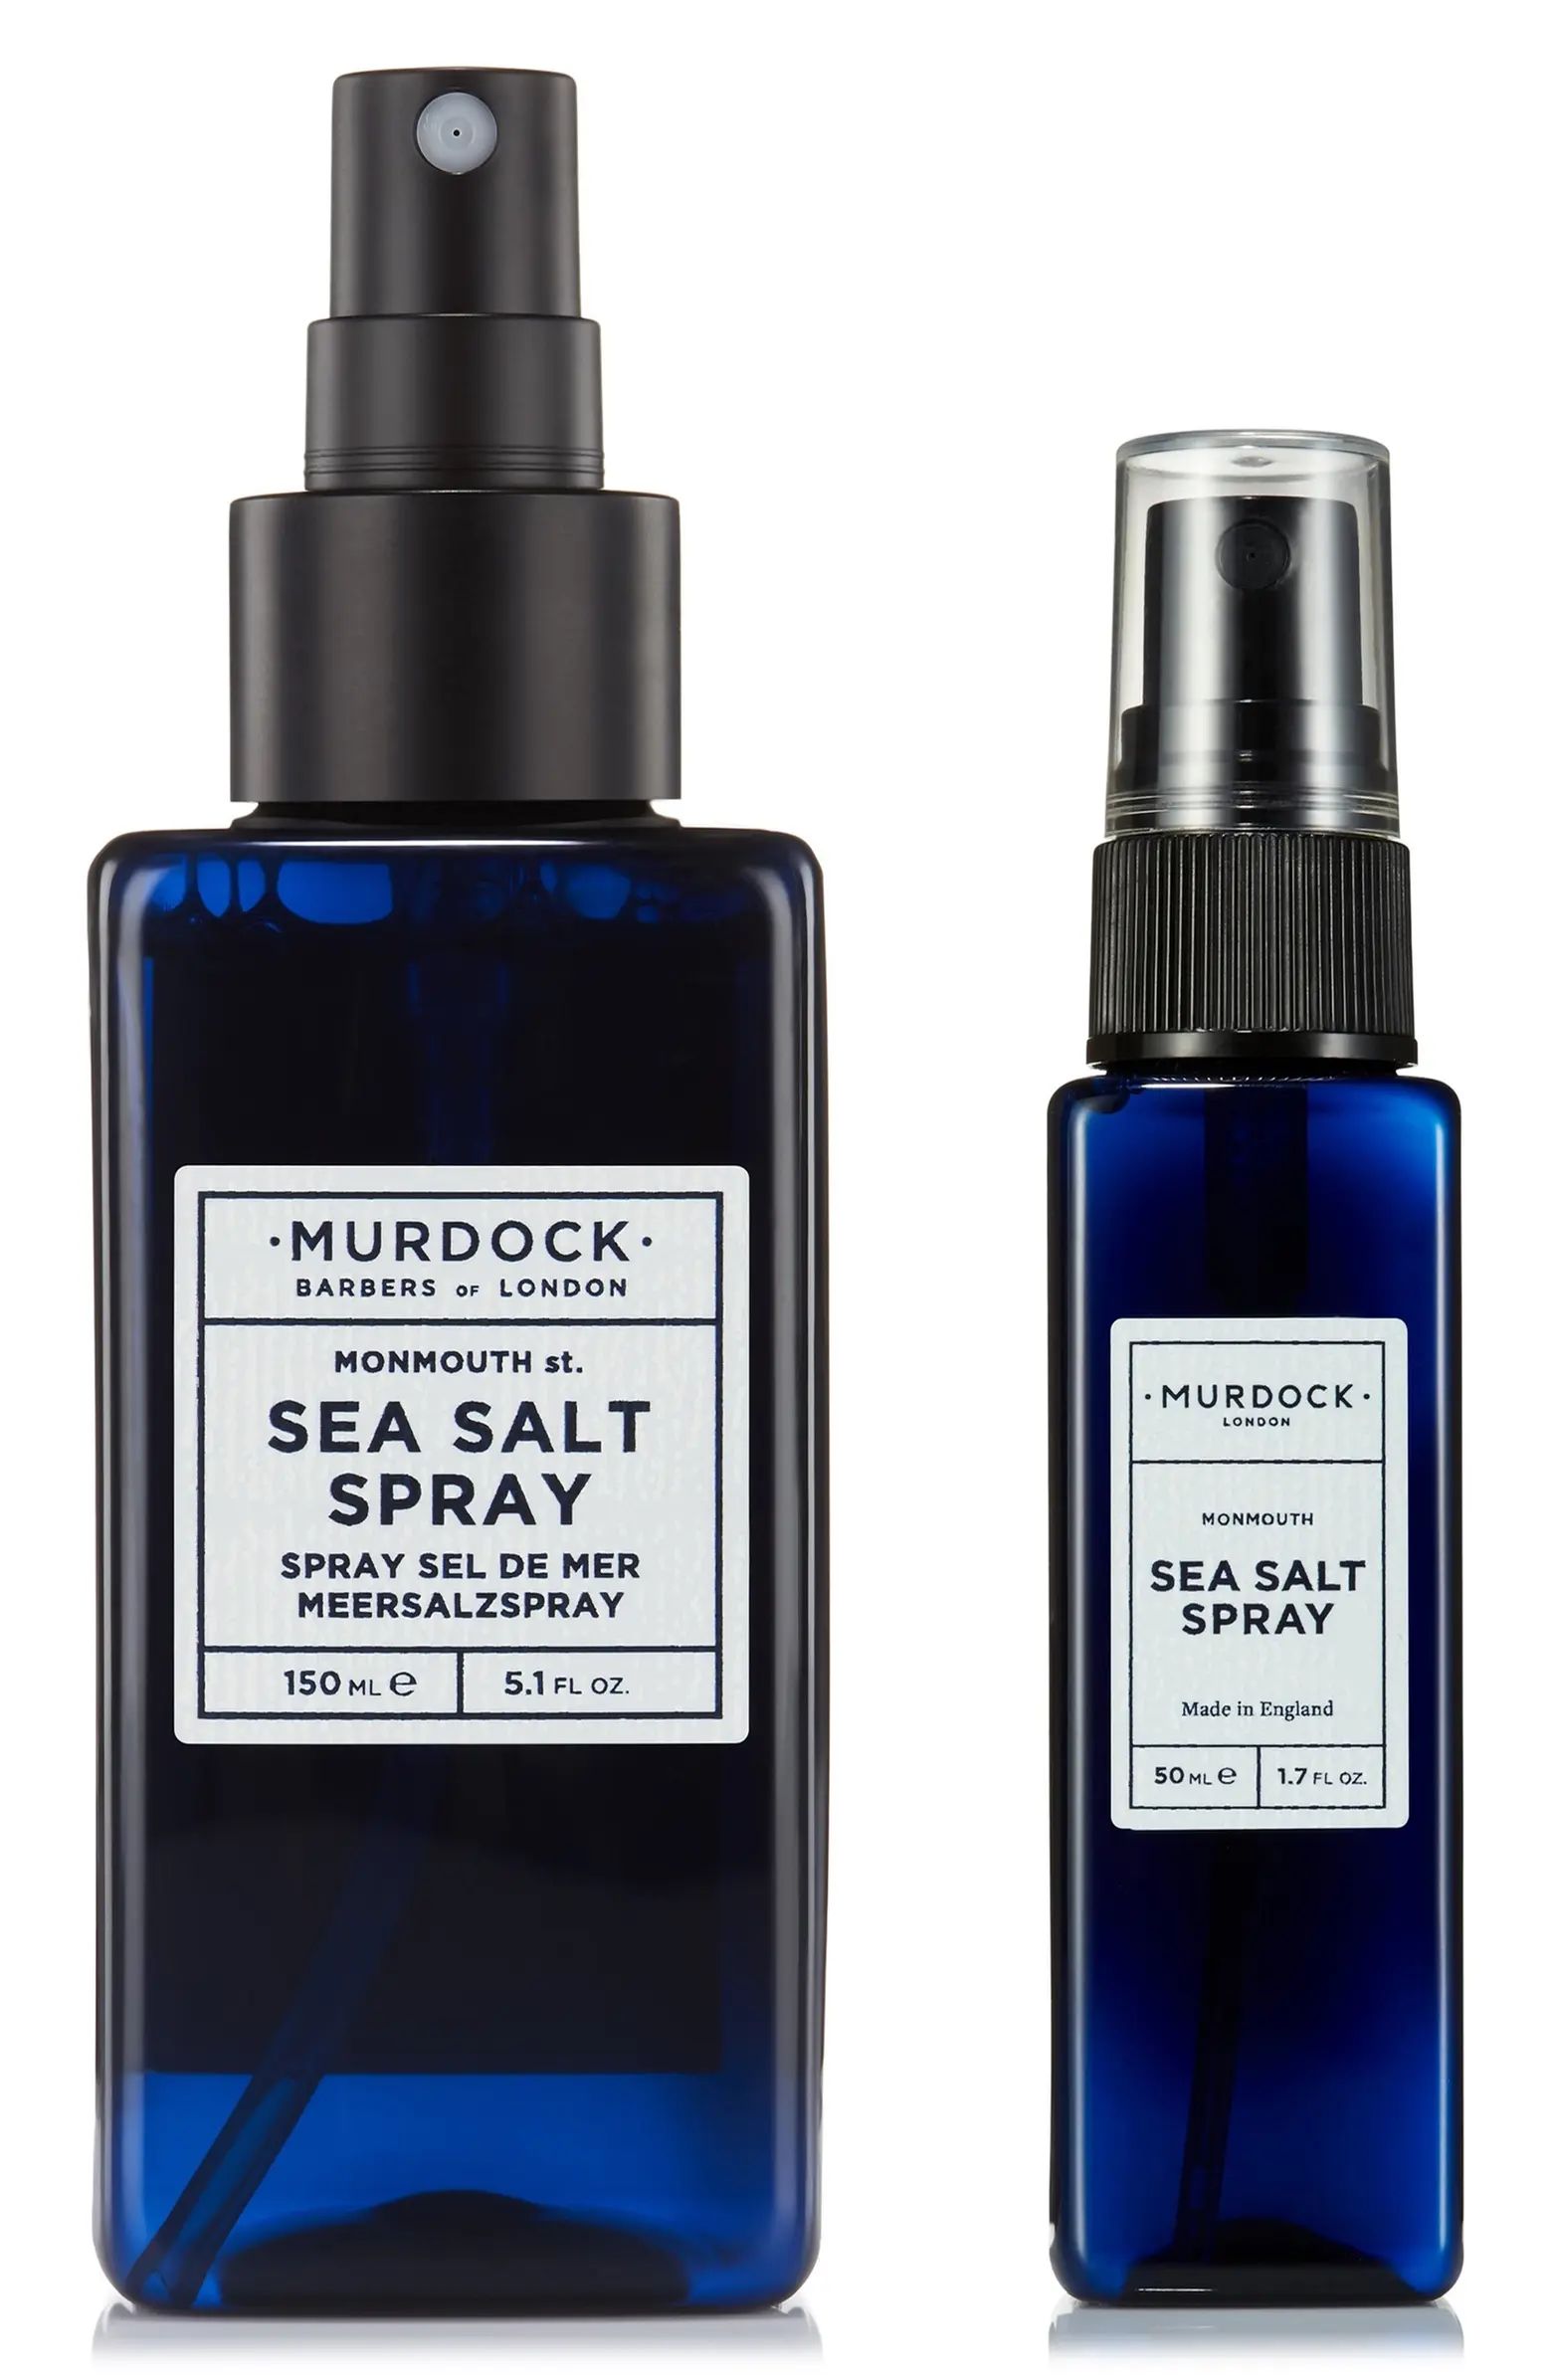 Sea Salt Spray Home & Away Set USD $39 Value | Nordstrom